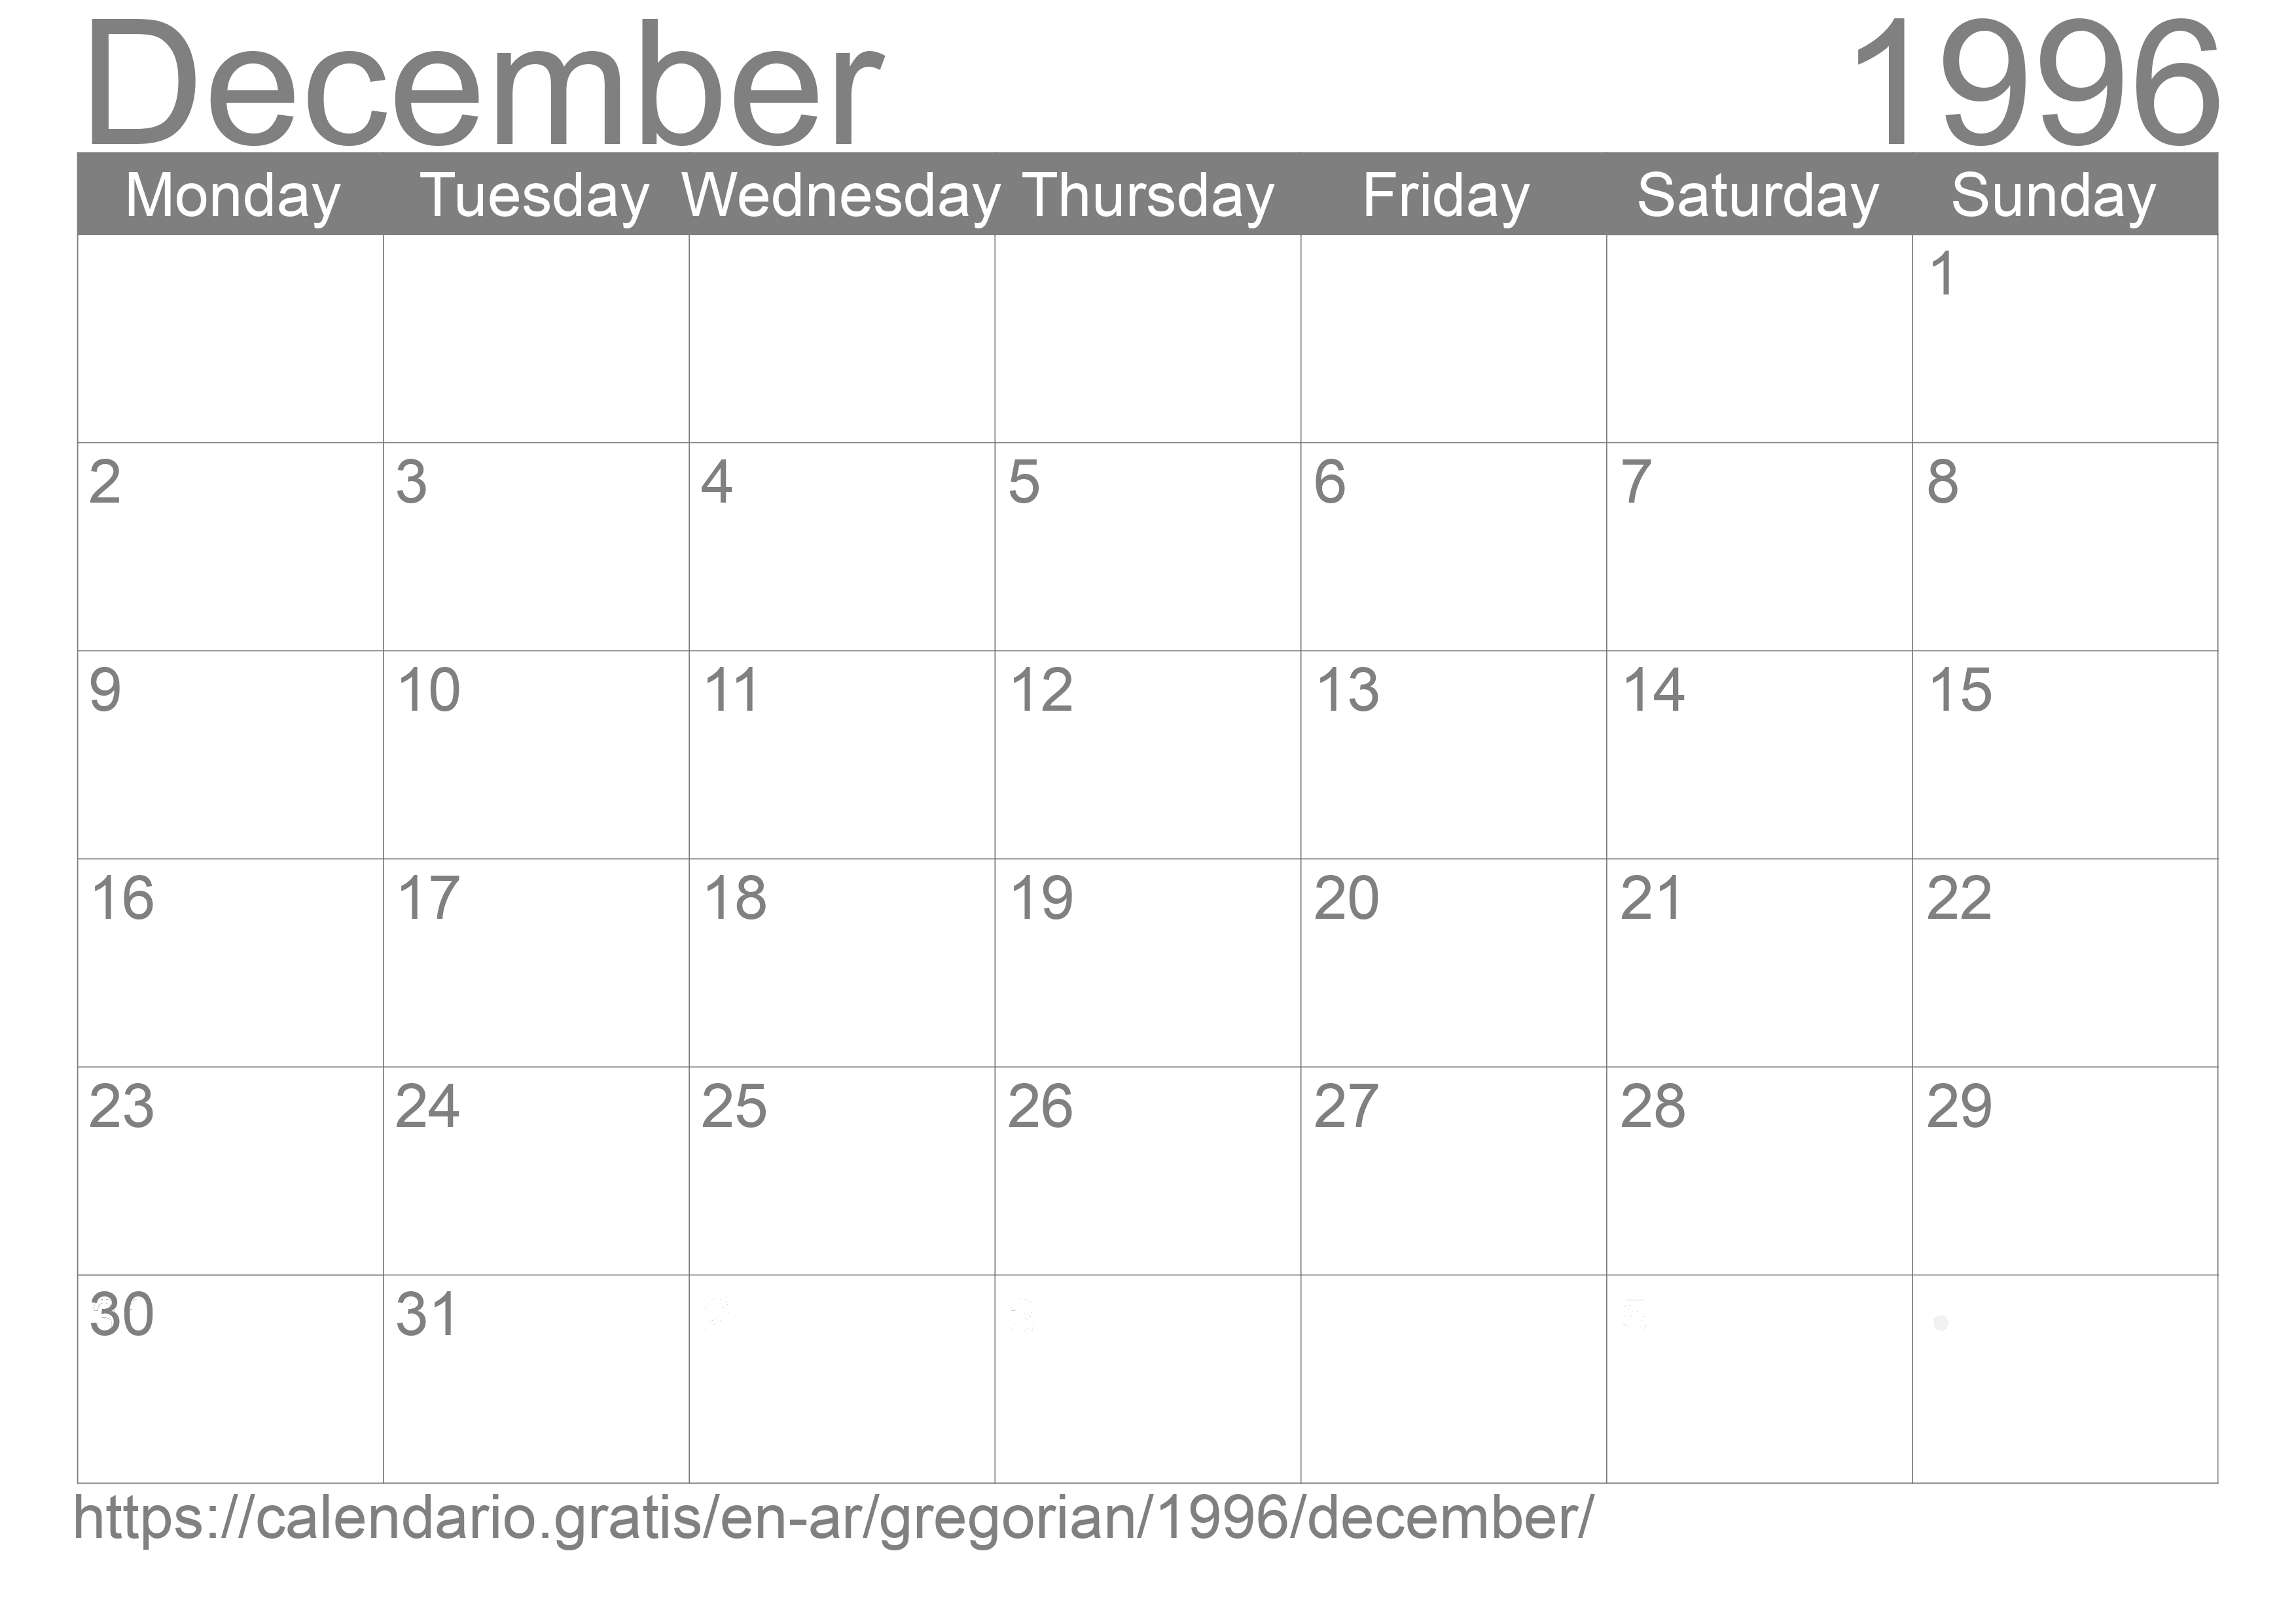 Calendar December 1996 to print